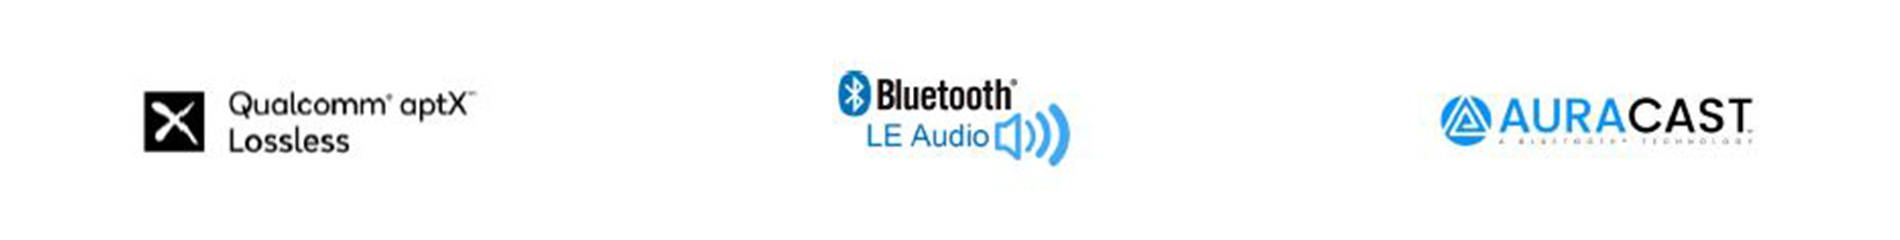 Sennheiser MOMENTUM True Wireless 4 with Adaptive Noise Cancellation LE Audio and Auracast